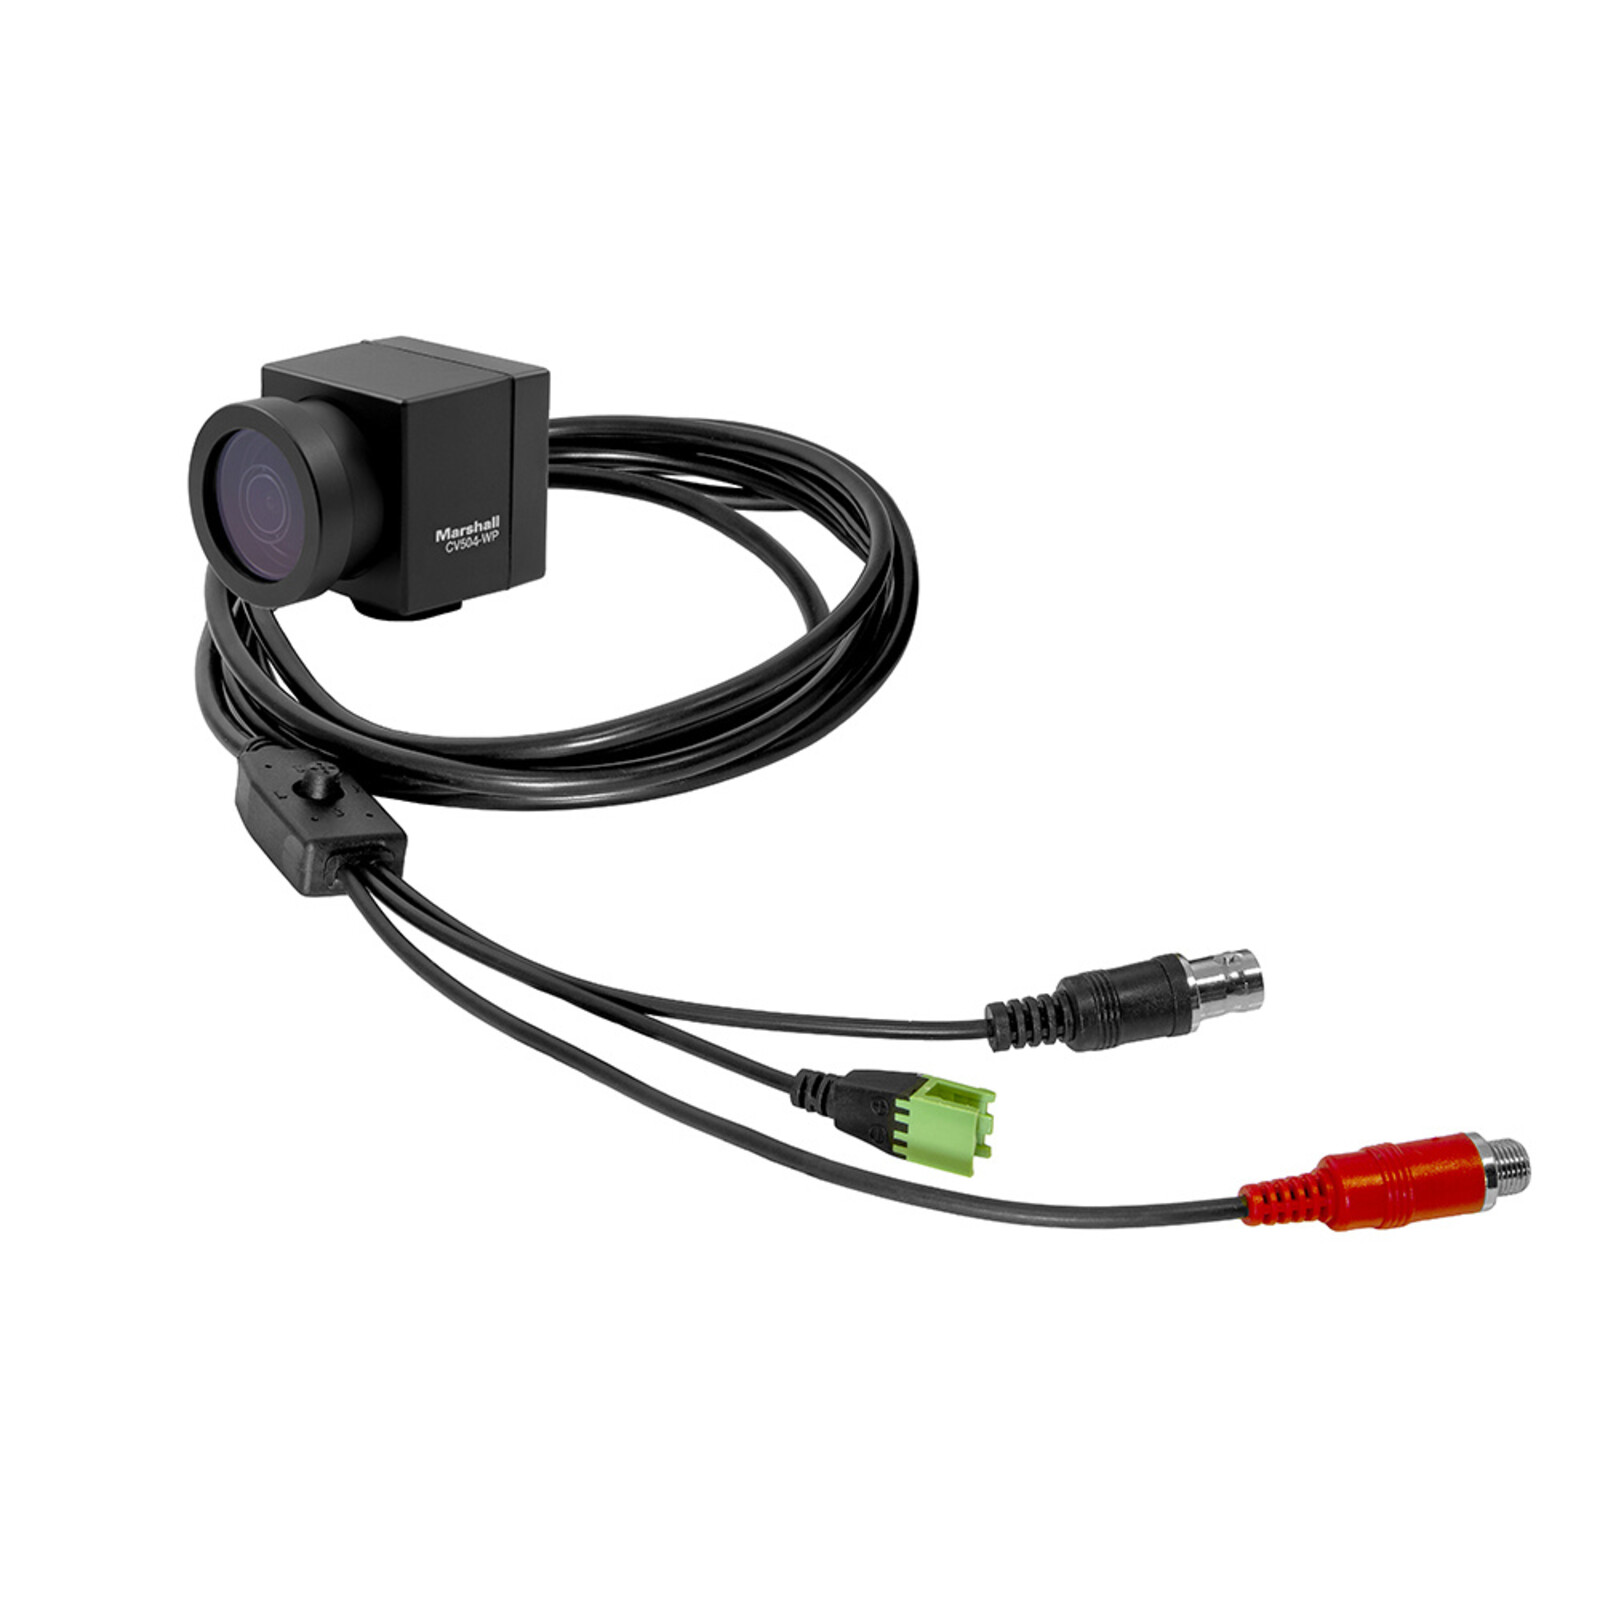 Marshall IP67 Weatherproof Mini Broadcast Camera with 4.0mm Interchangeable Lens – 3G-SDI Output (New Sensor)